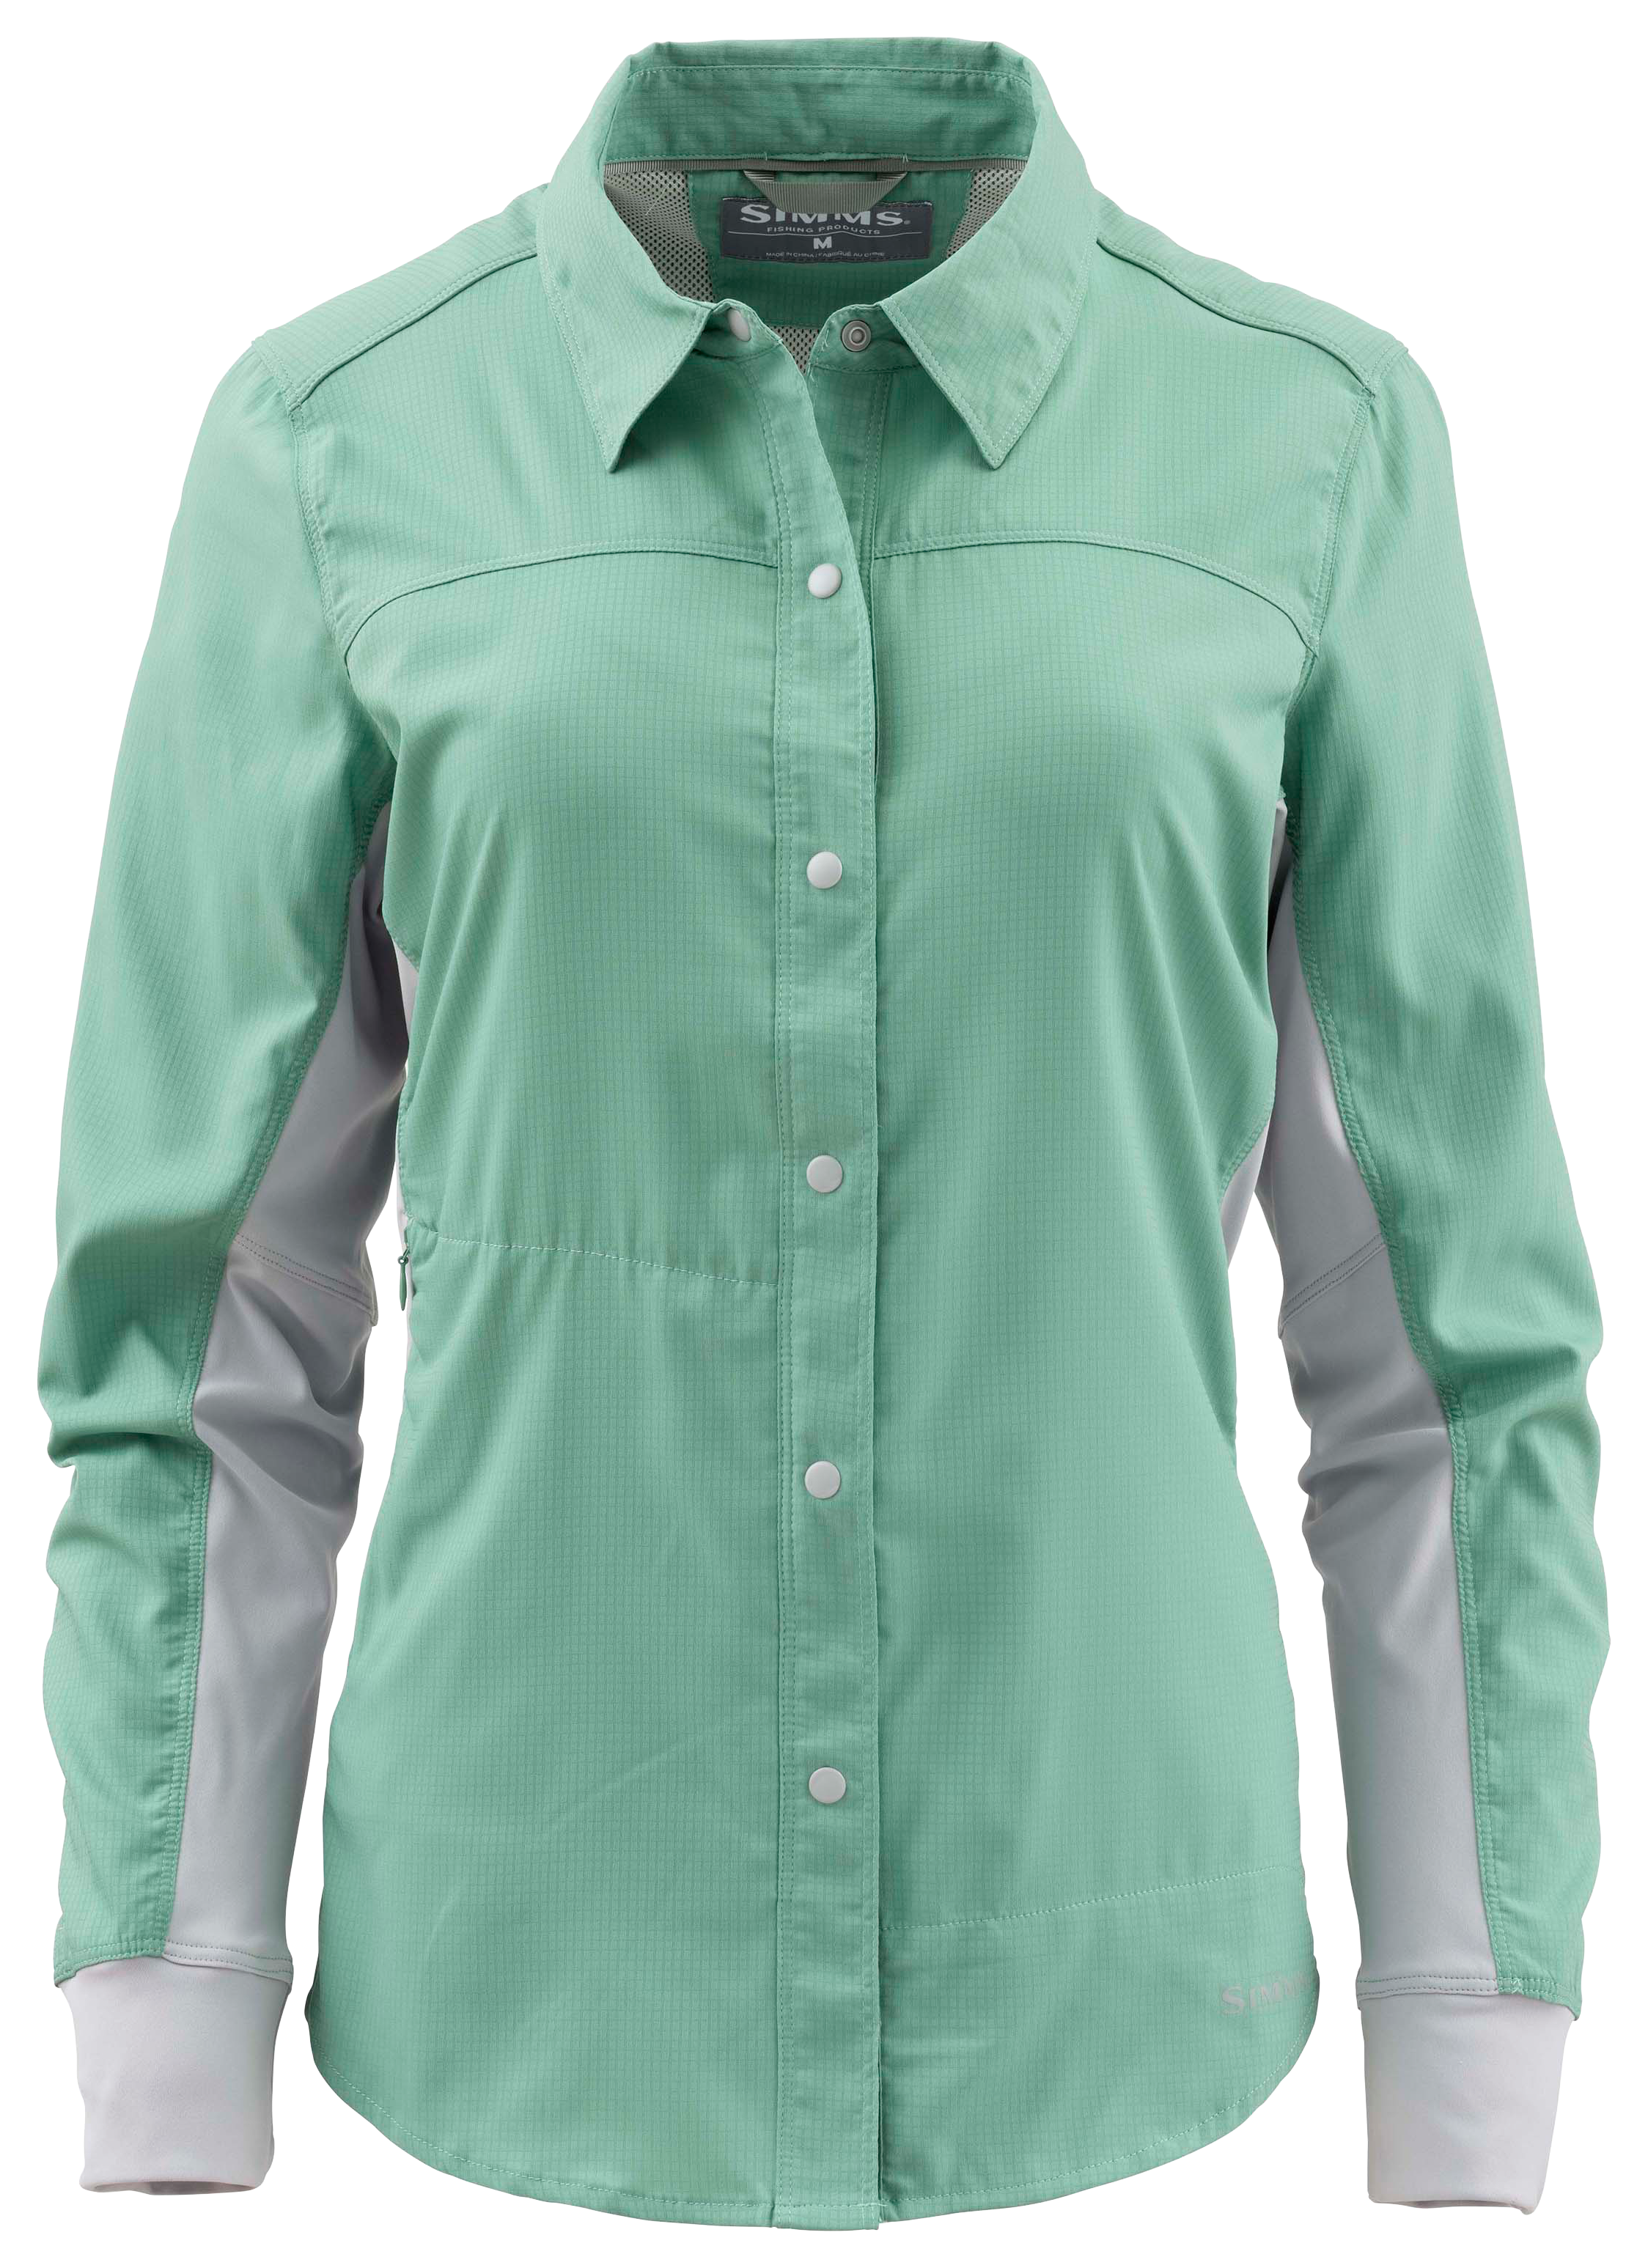 Simms BiComp Long-Sleeve Fishing Shirt for Ladies